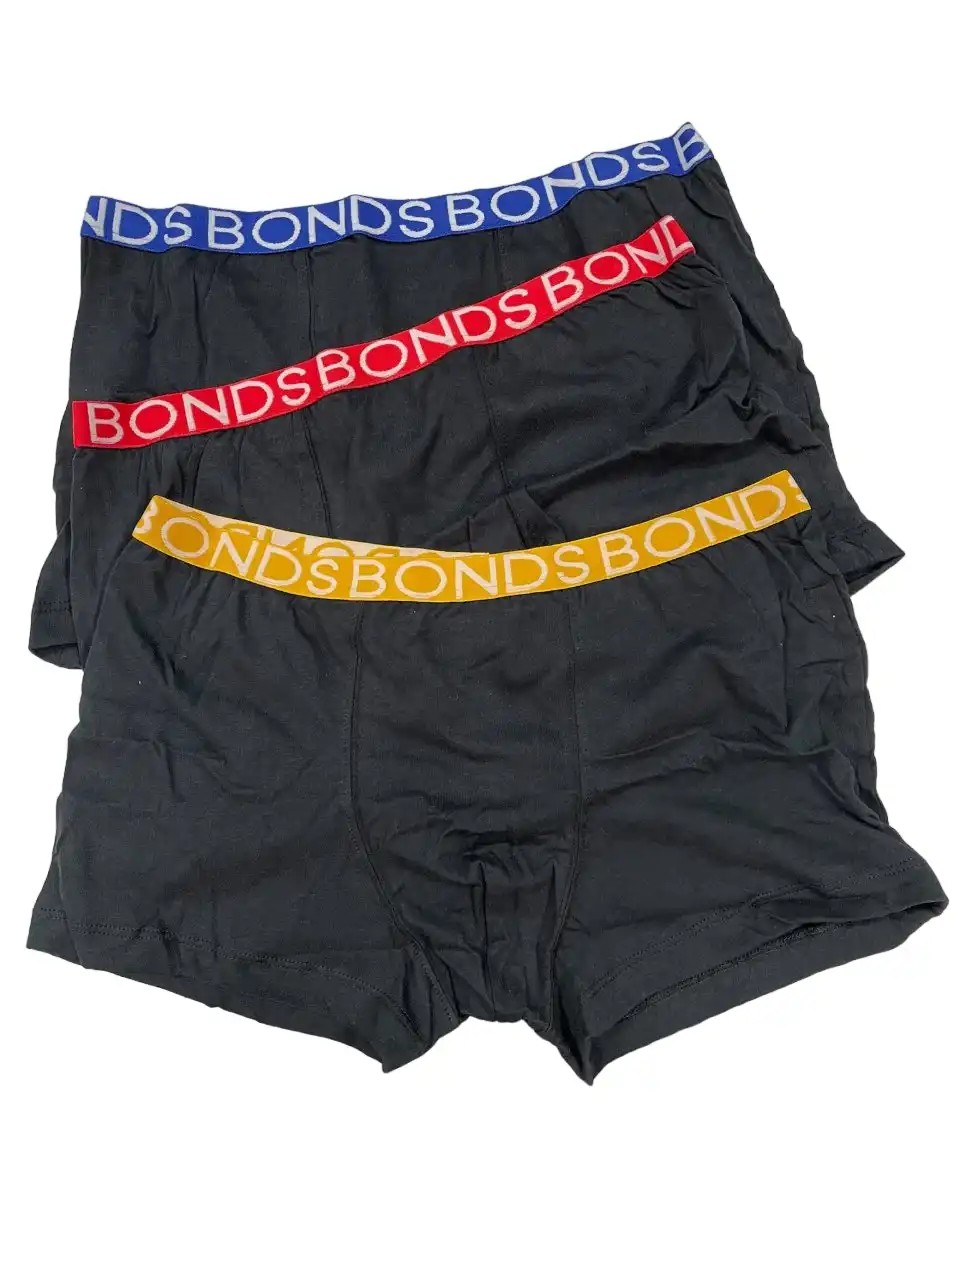 6 Pairs X Boys Bonds Trunks Plain Underwear Undies Black With Multi Band